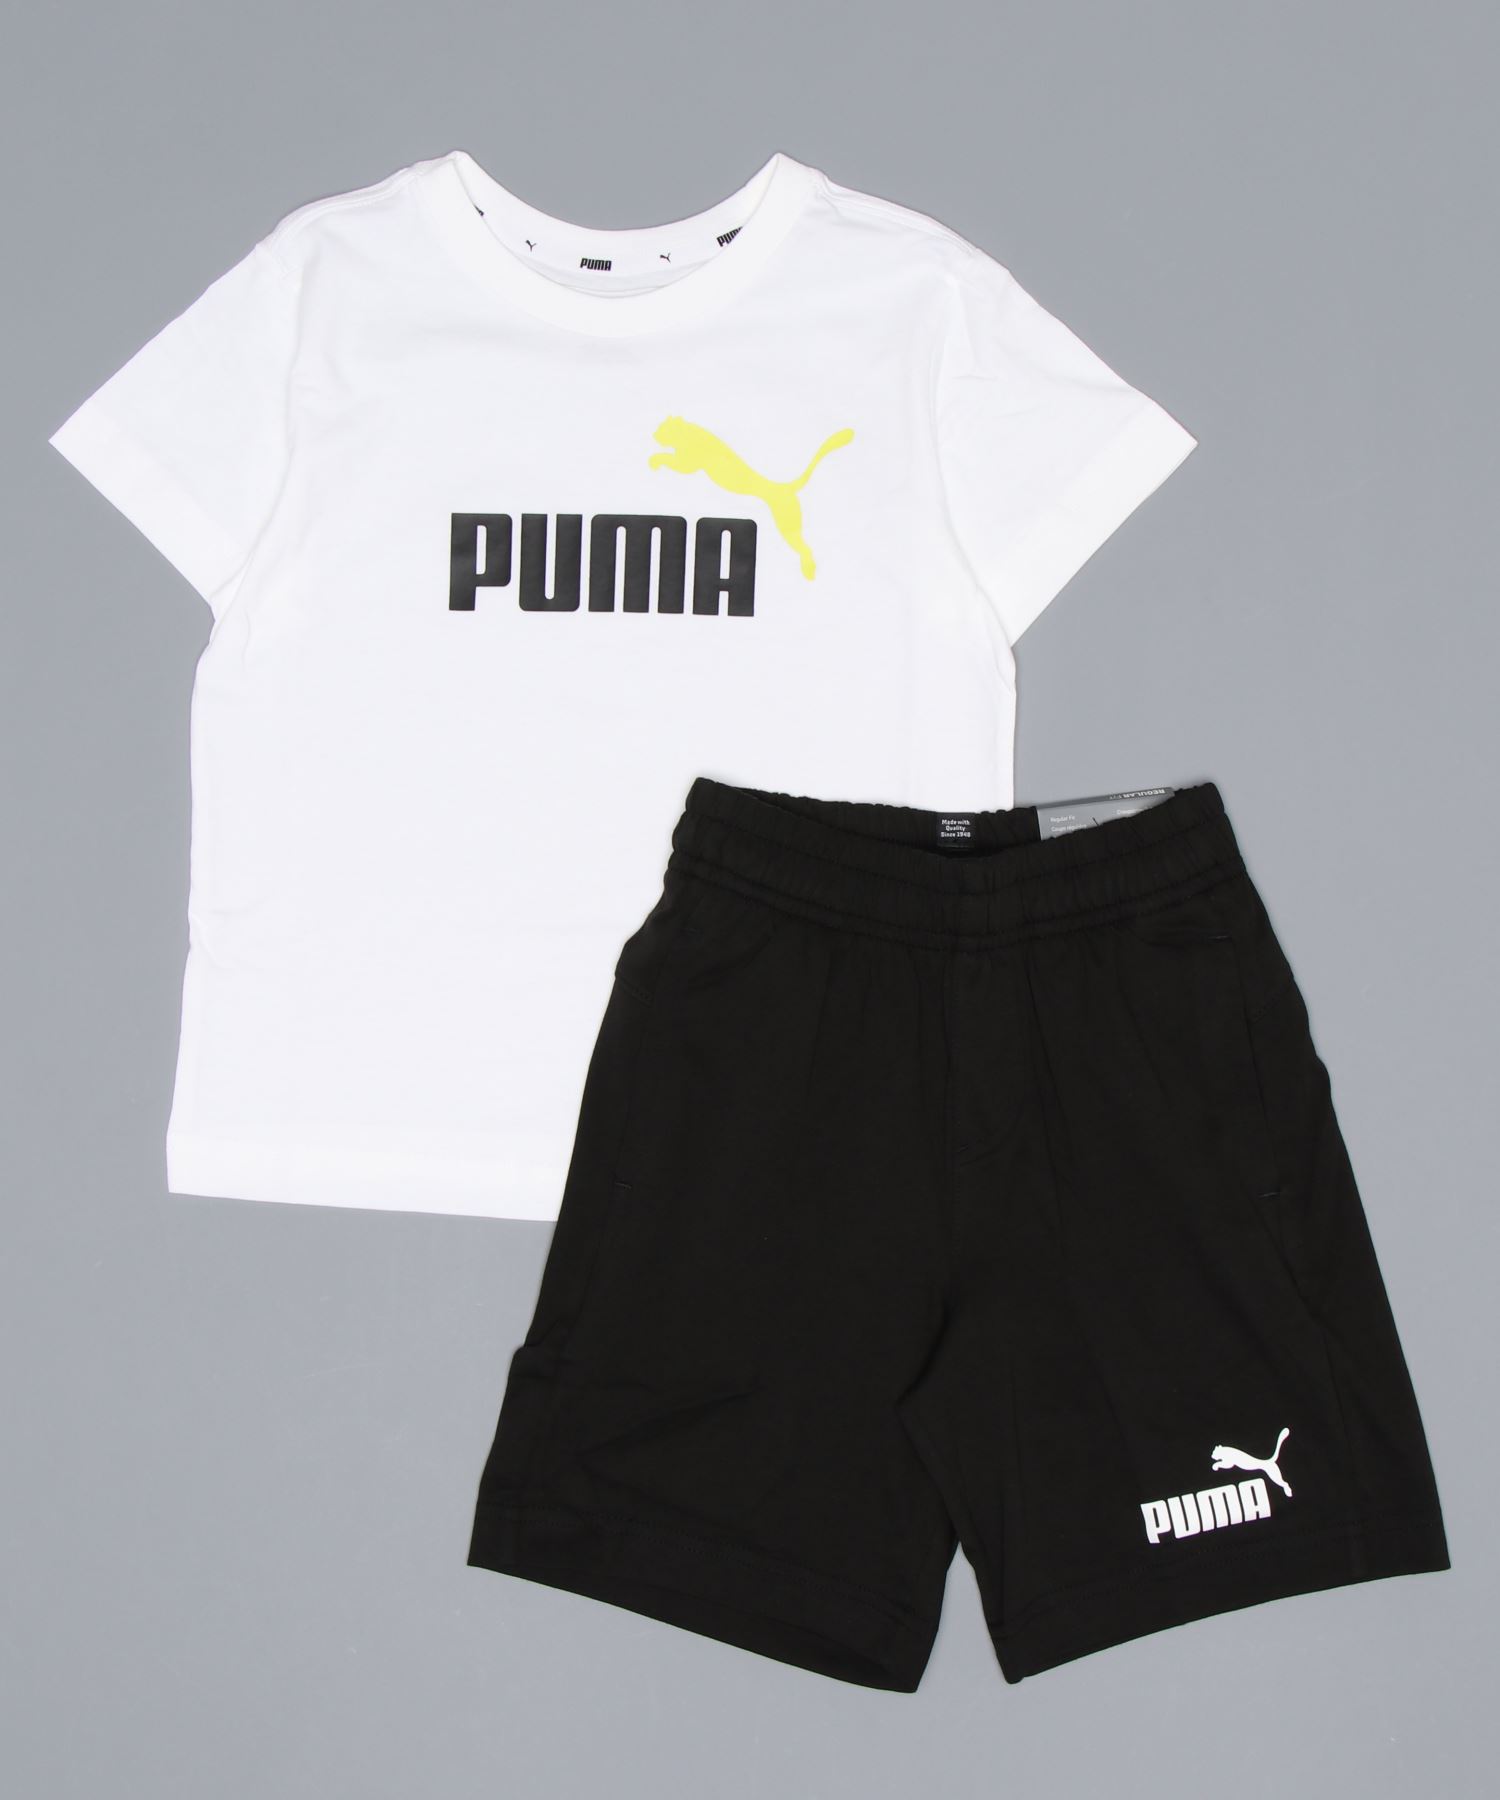 PUMAPUMA プーマ キッズ ボーイズ 120-160cm Tシャツ 上下セット ショーツ 若者の大愛商品 予約受付中